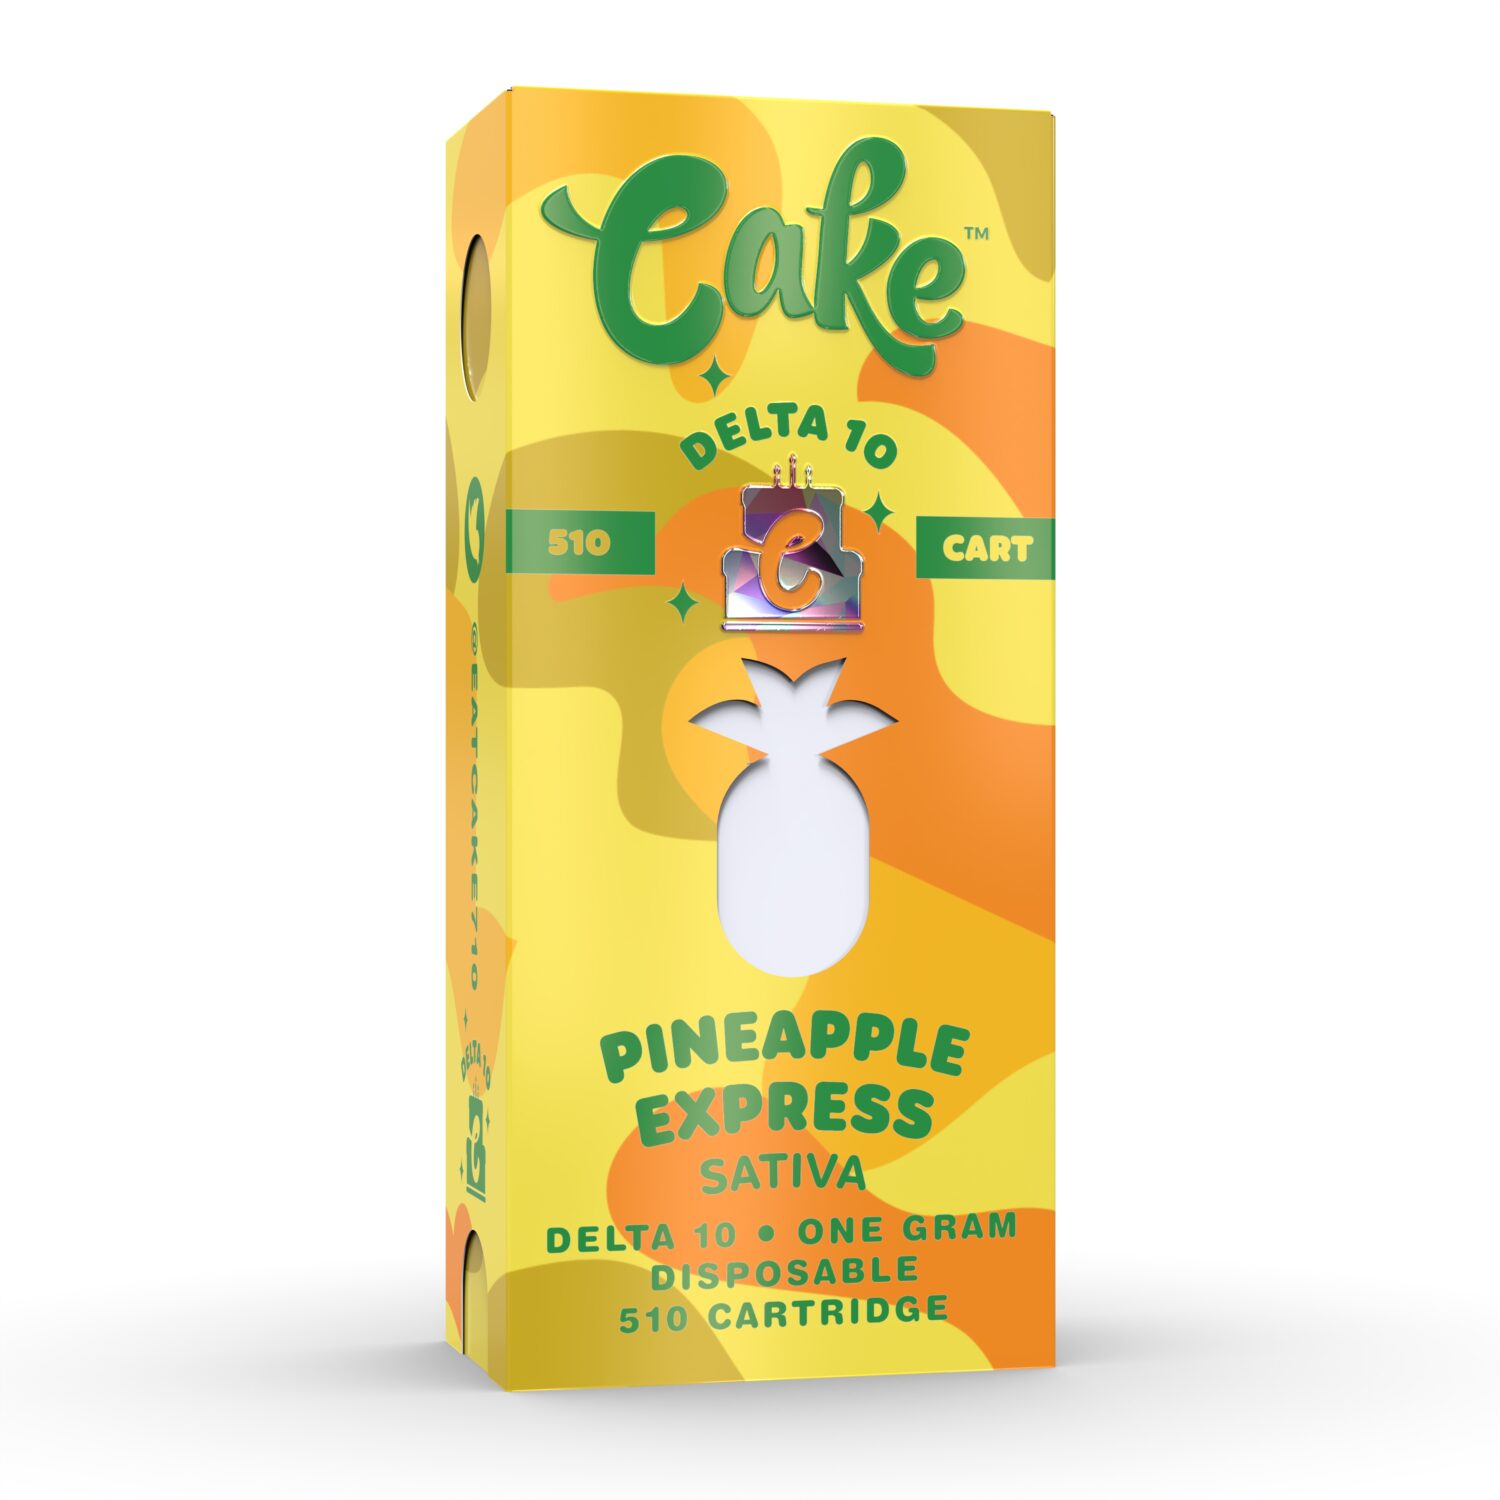 Cake-Delta-10-Cartridge-pineapple-express-scaled-1.jpg